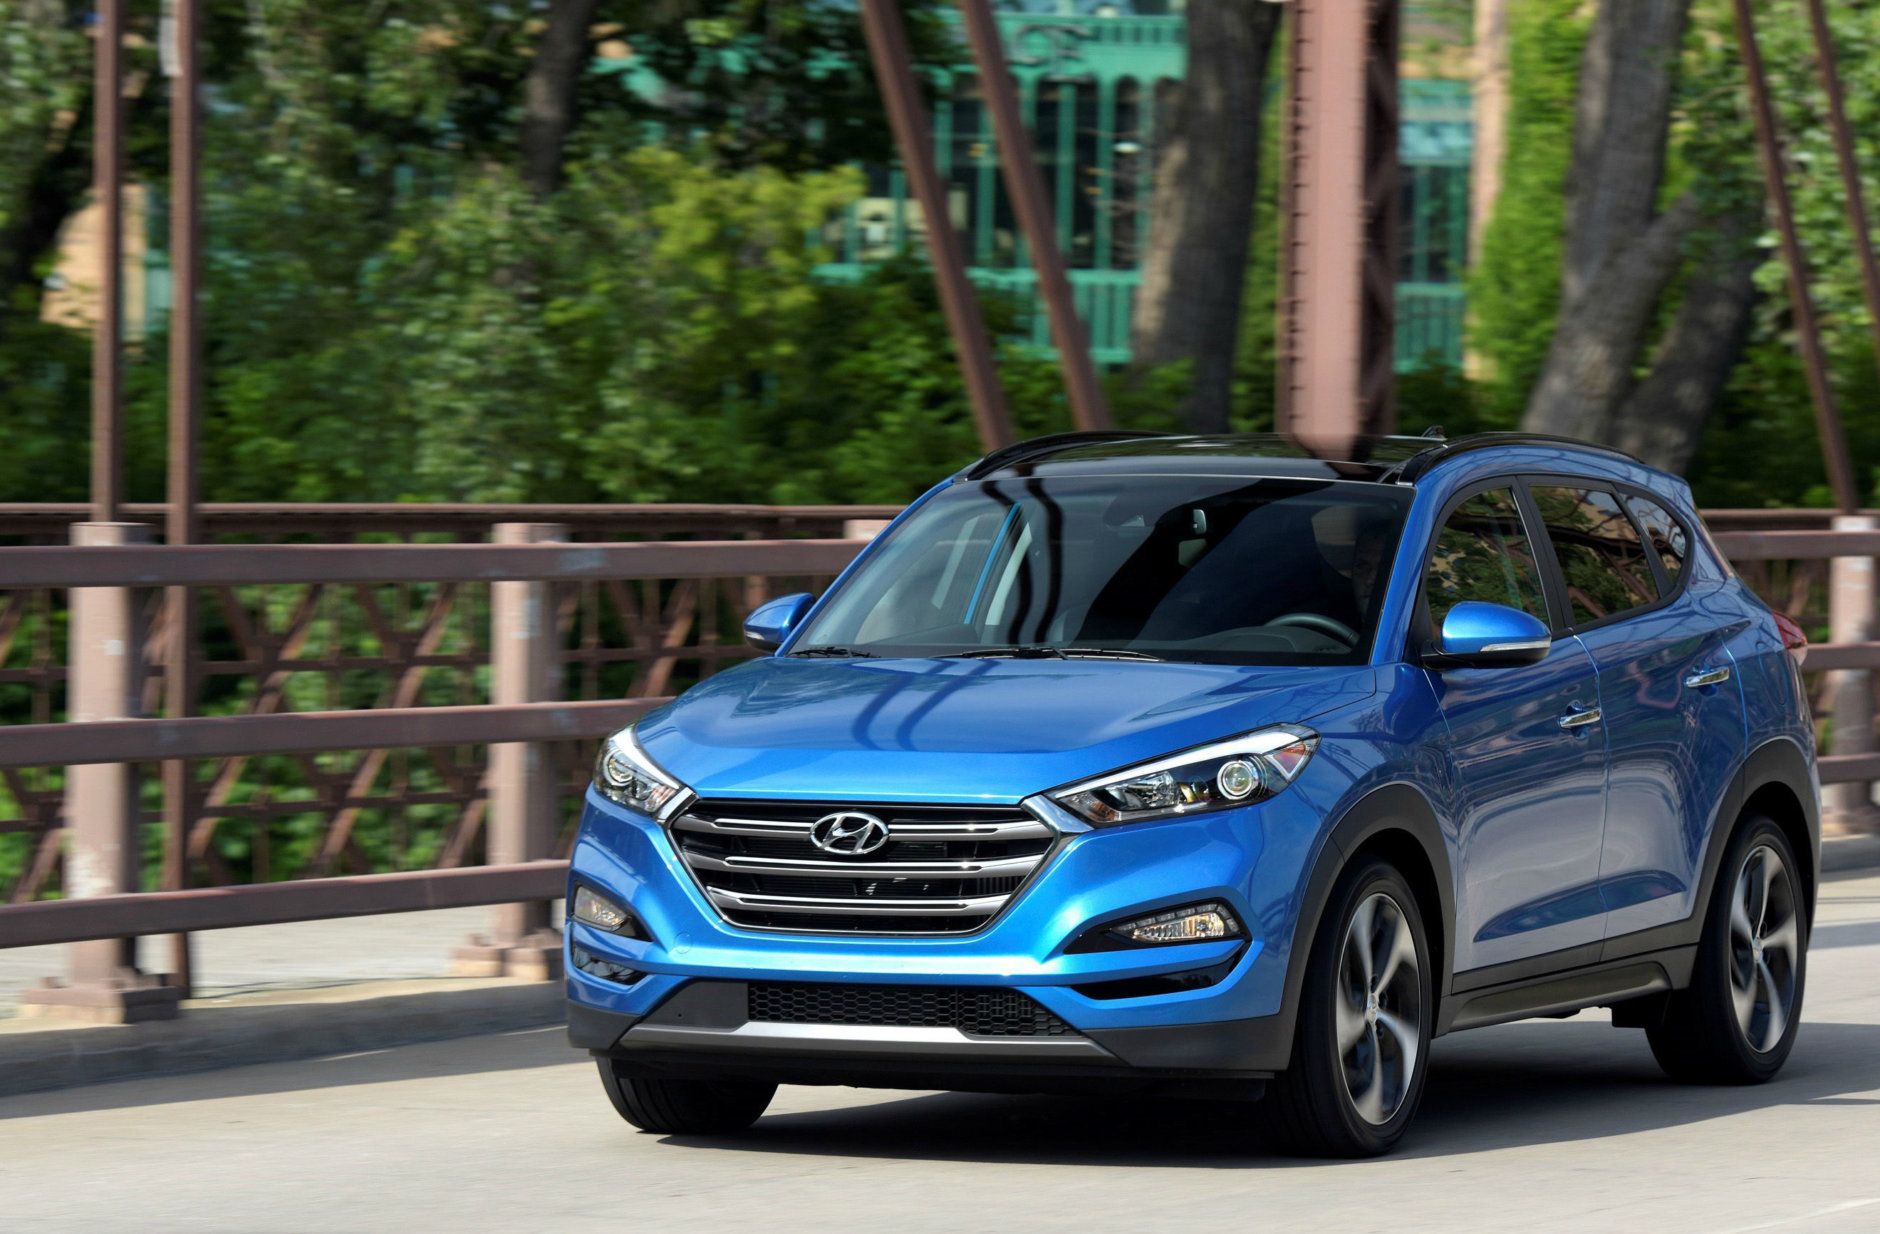 Best New SUV/Crossover for Teens $30,000 to $35,000:

The 2018 Hyundai Tucson

(Courtesy Hyundai Motor America)